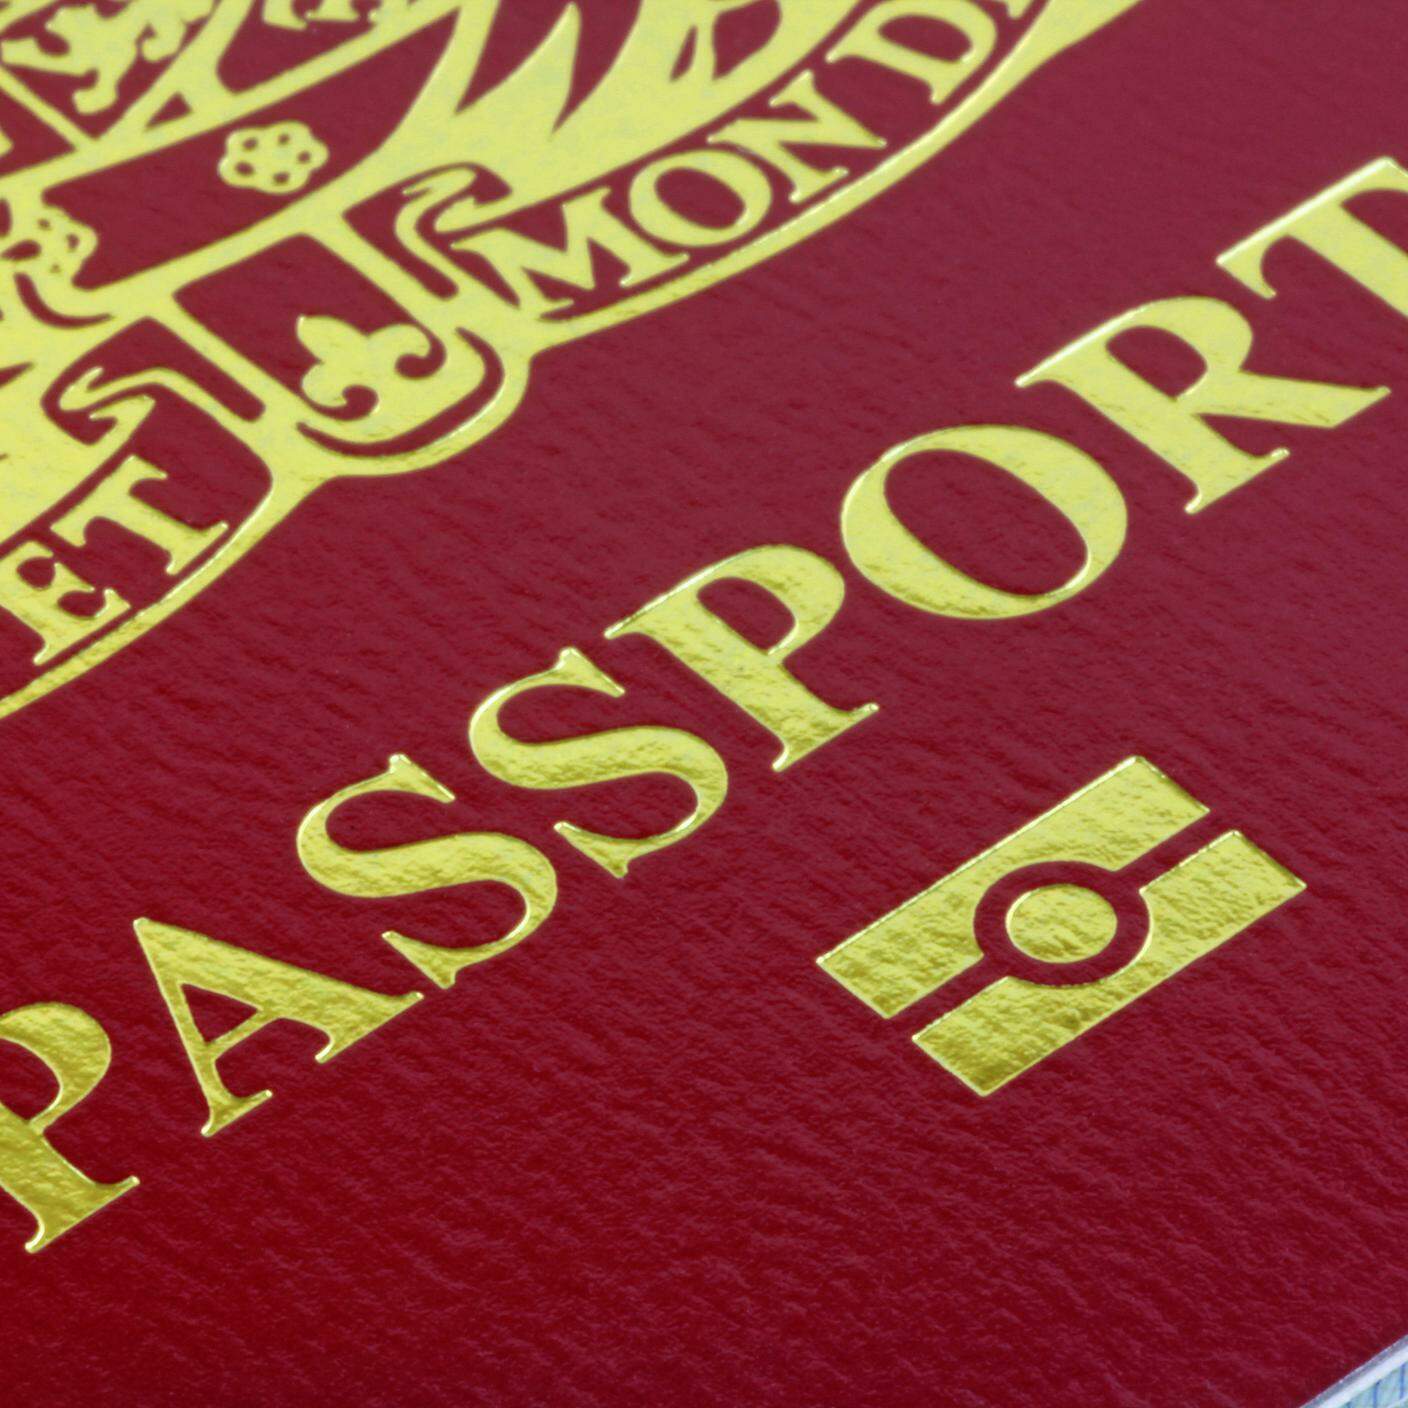 iStock-passaporto 